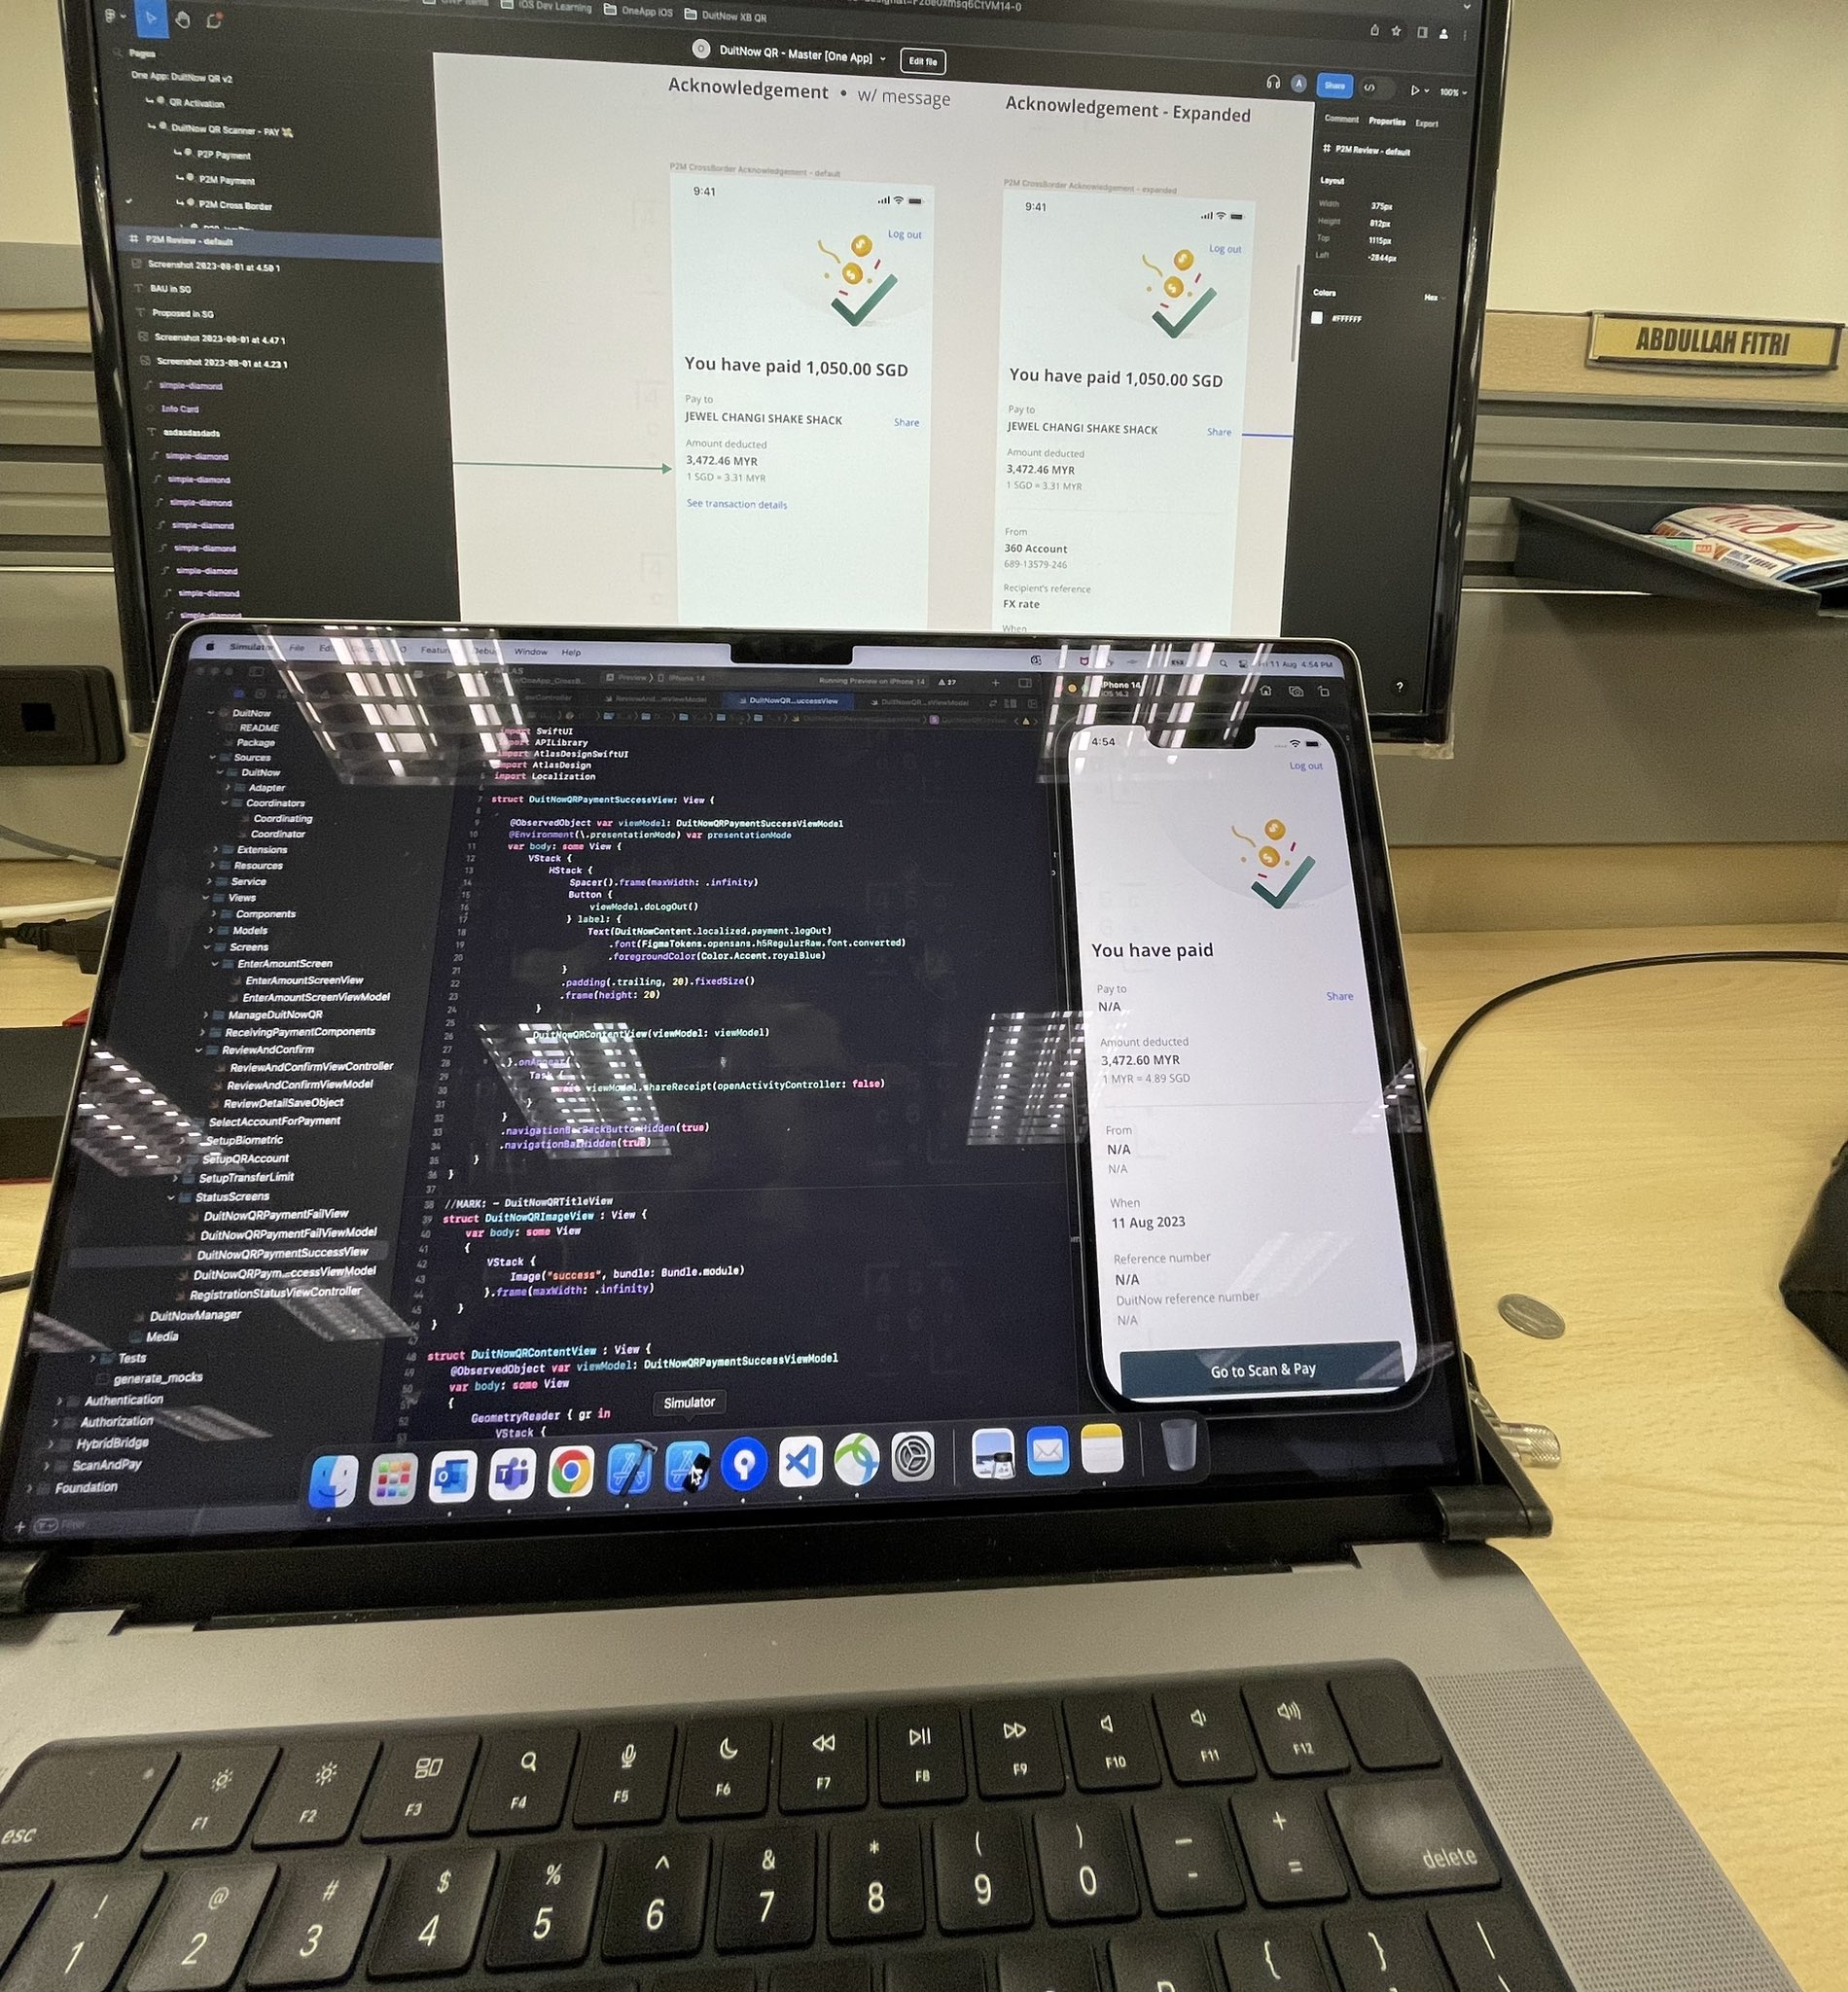 Macbook with Xcode opened